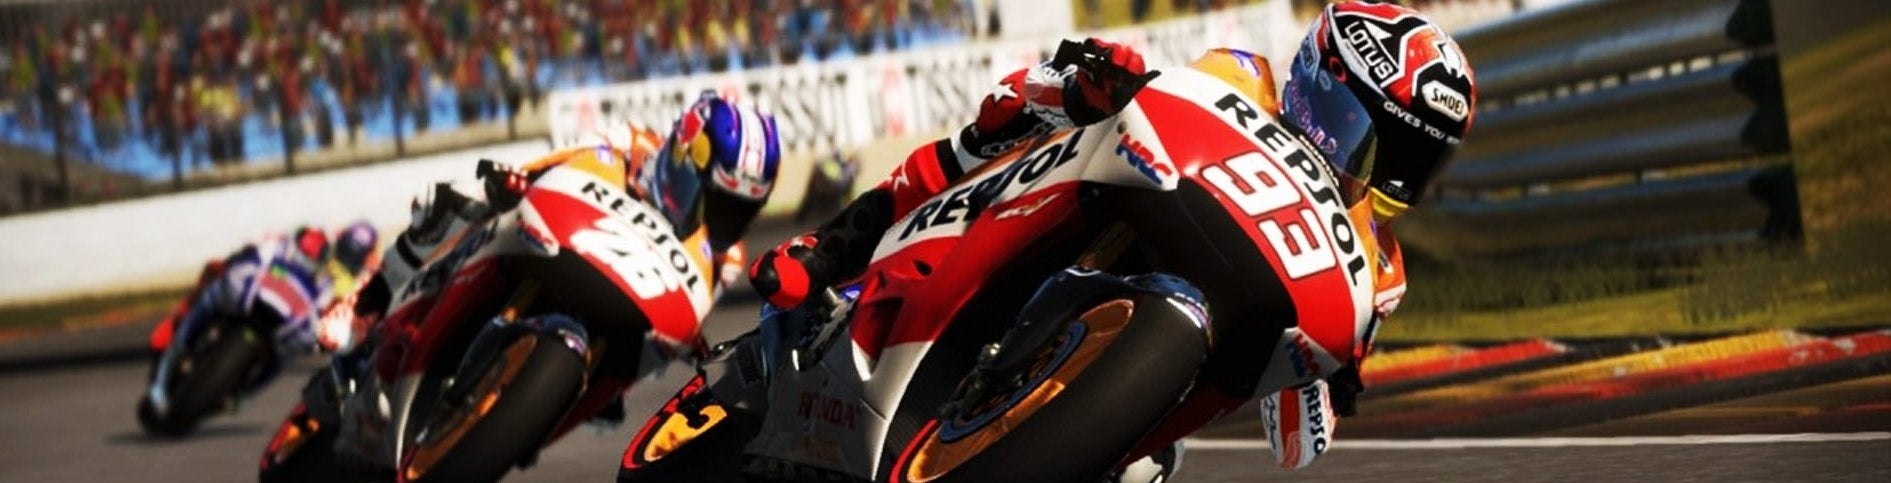 Image for RECENZE MotoGP 14